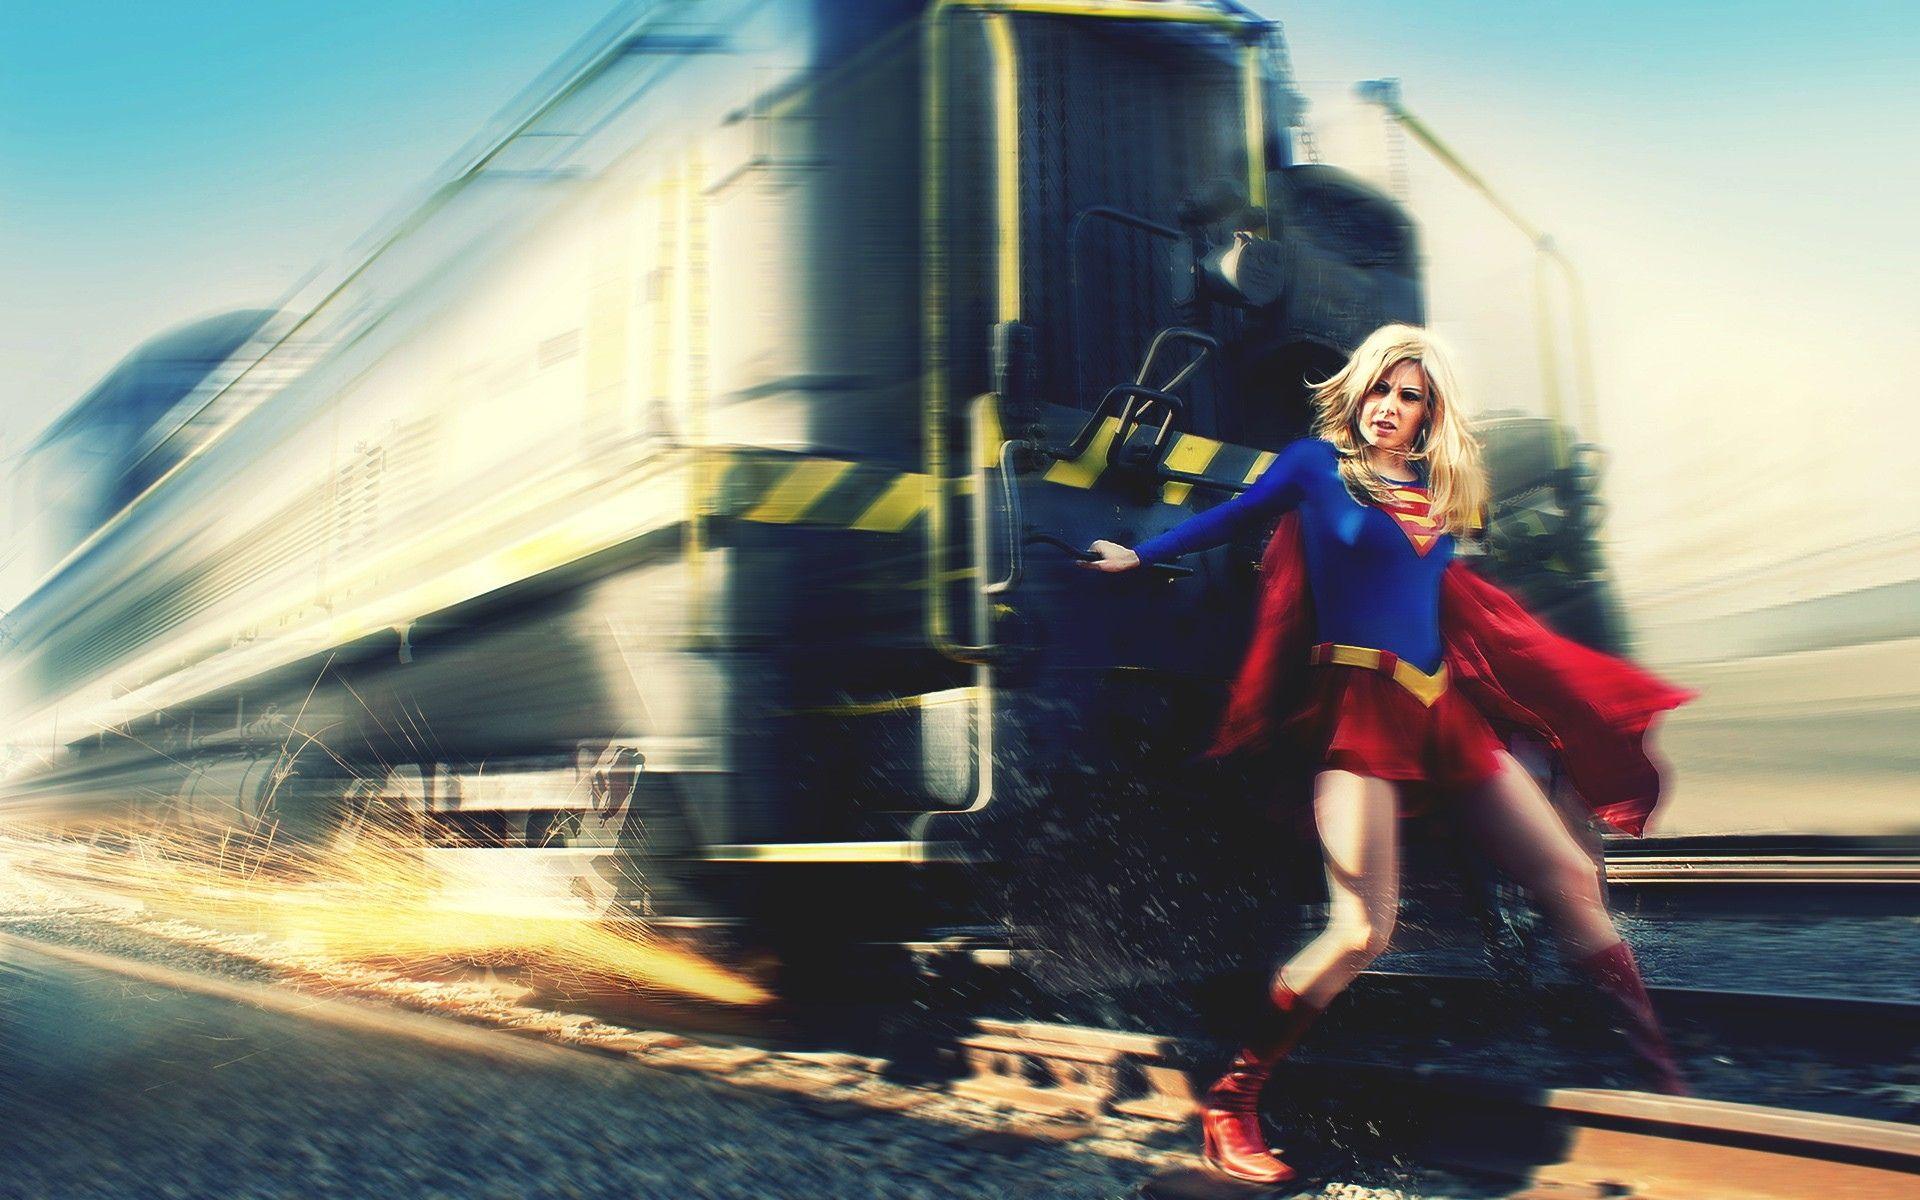 Supergirl HD Wallpaper